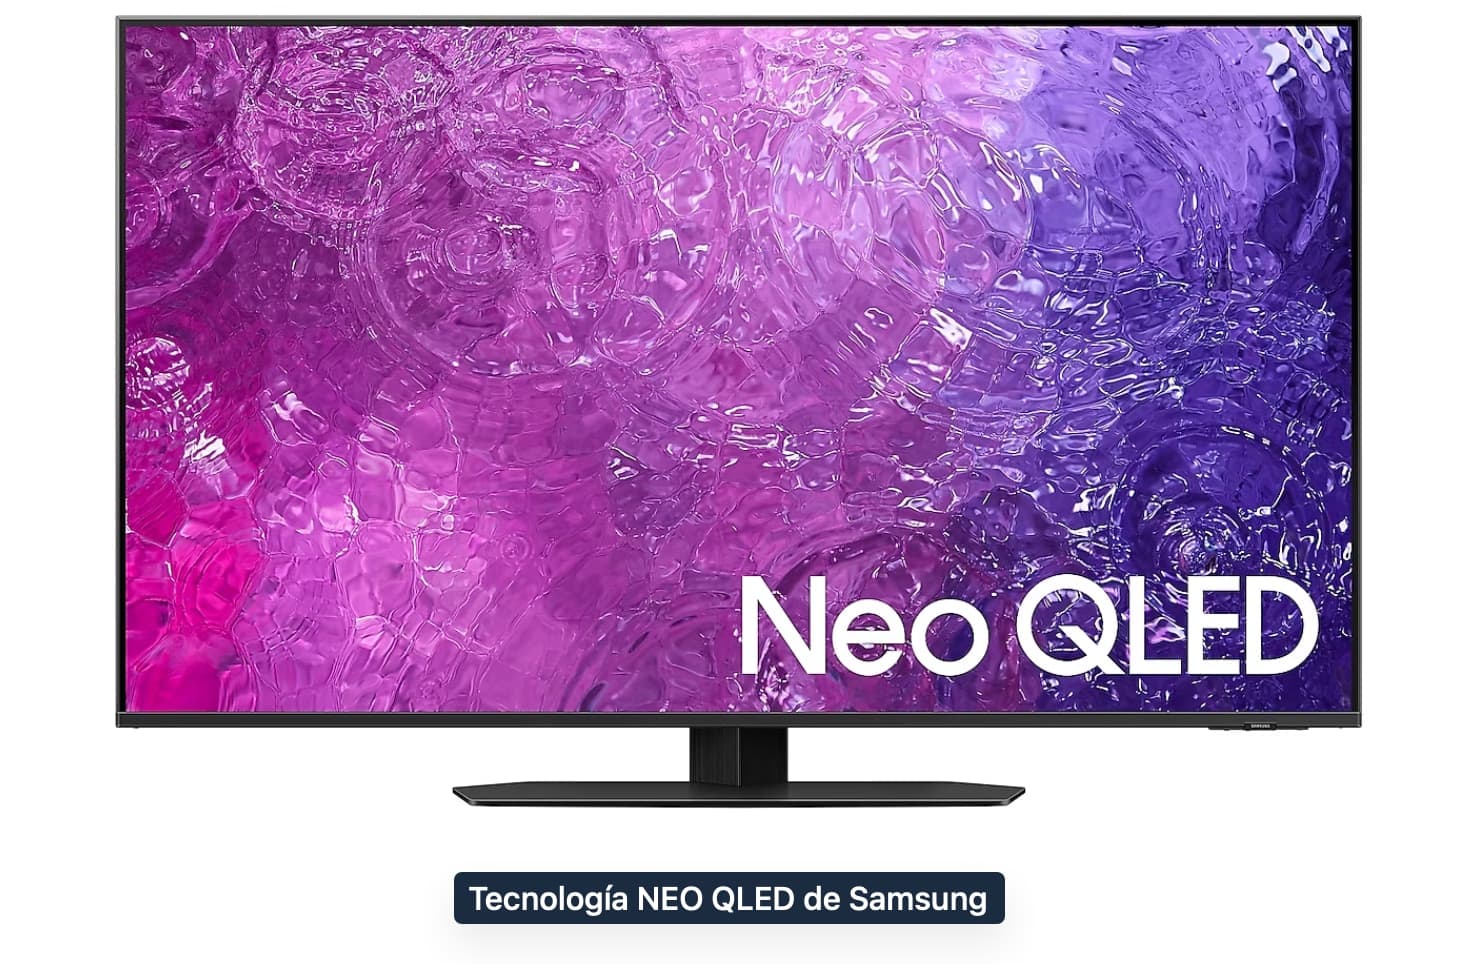 Tecnologia NEO QLED de Samsung para sus televisores